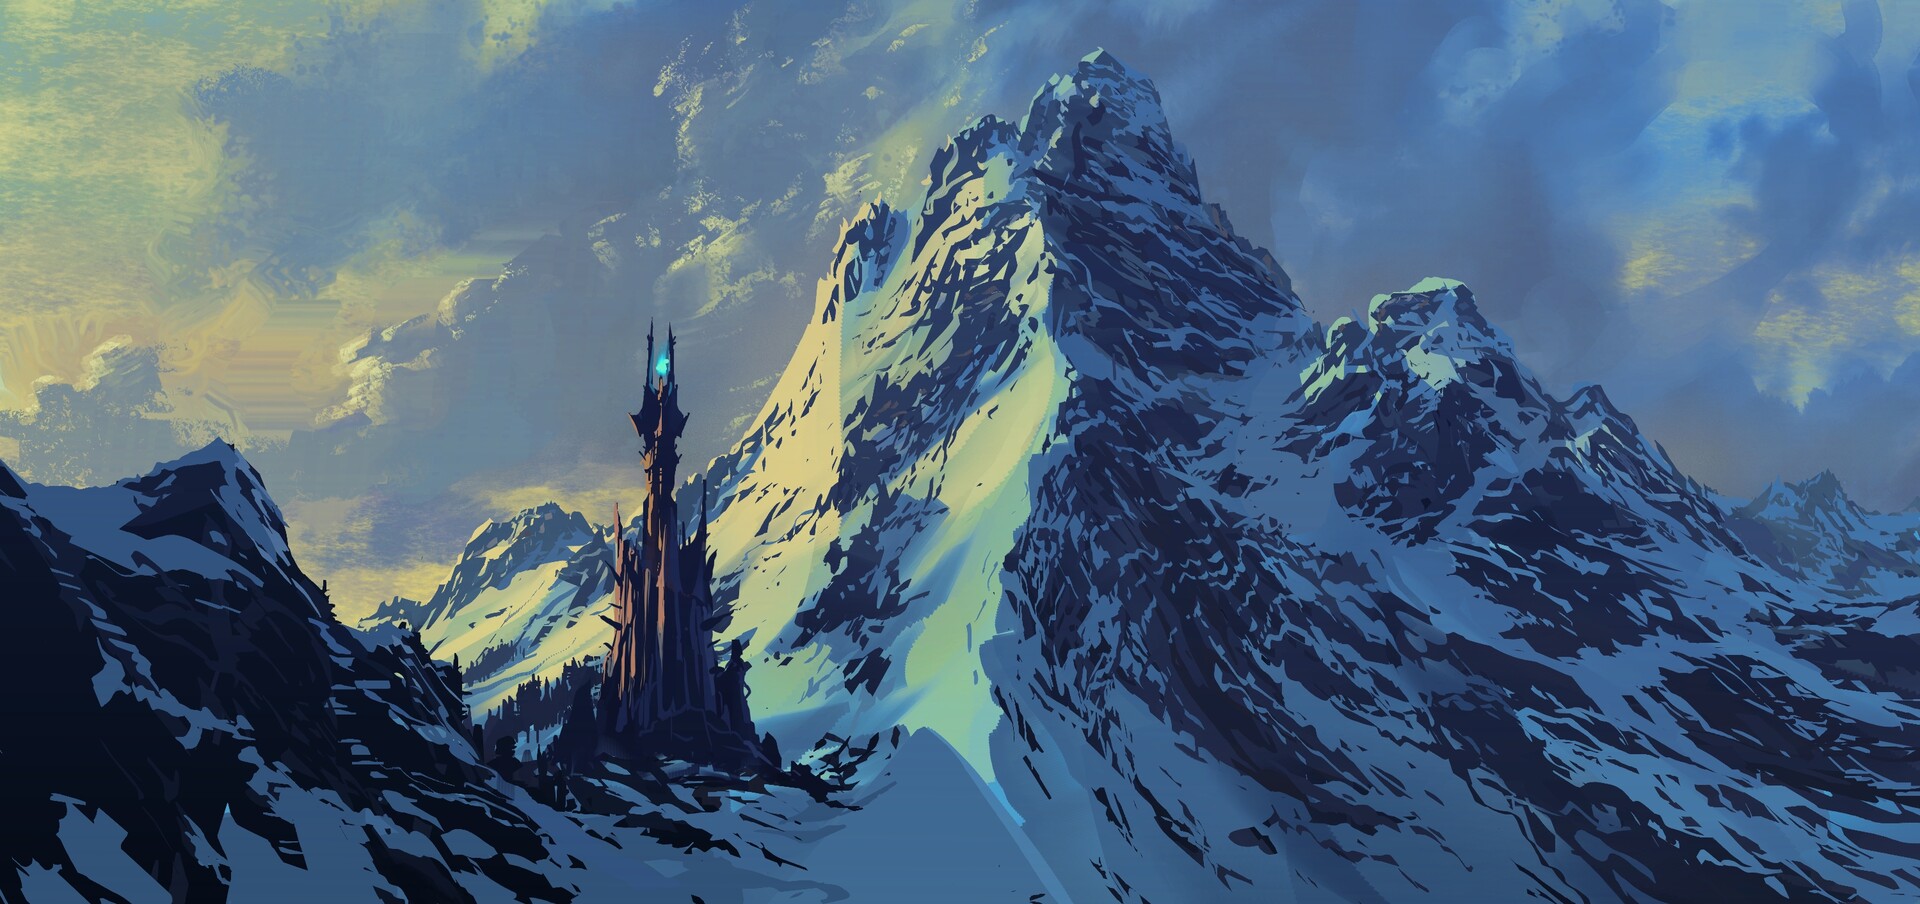 Philipp A Ulrich Digital Art Fantasy Art Snow Tower Mountains 1920x904